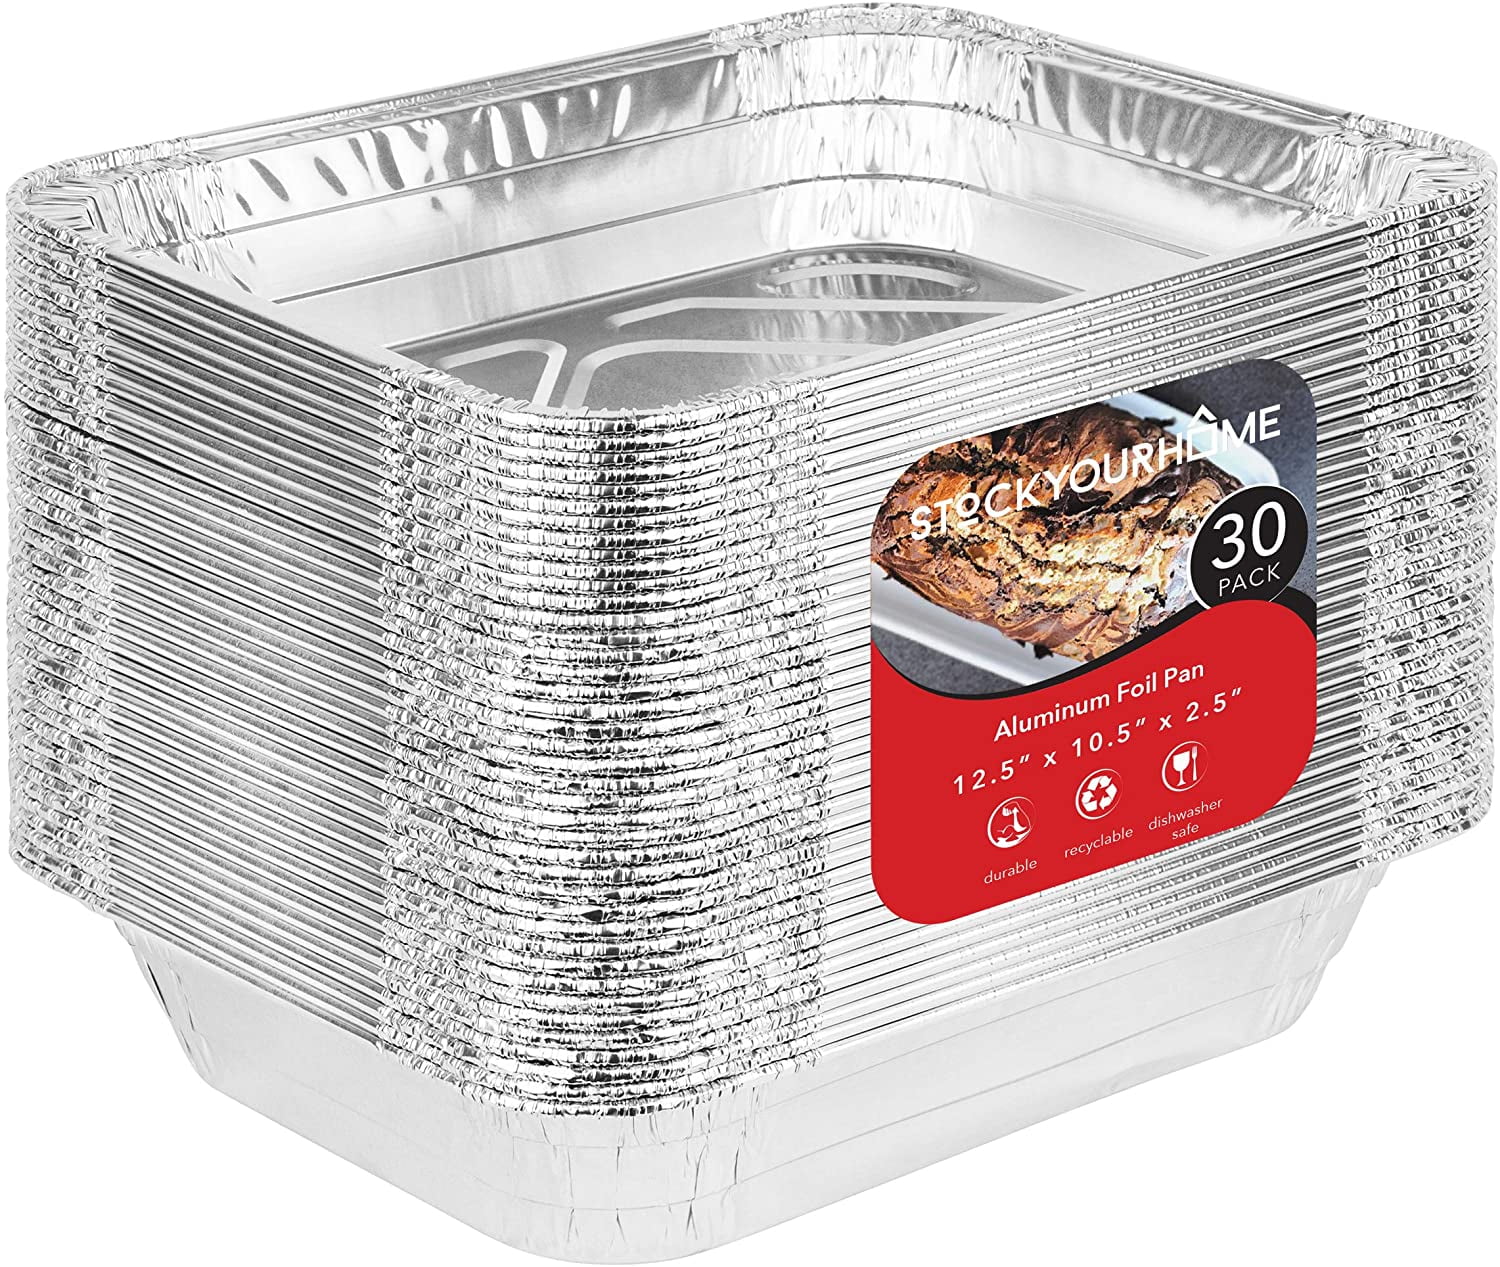 Stock Your Home 8 x 8 Disposable Square Aluminum Pans with Foil Lids 20 Count 